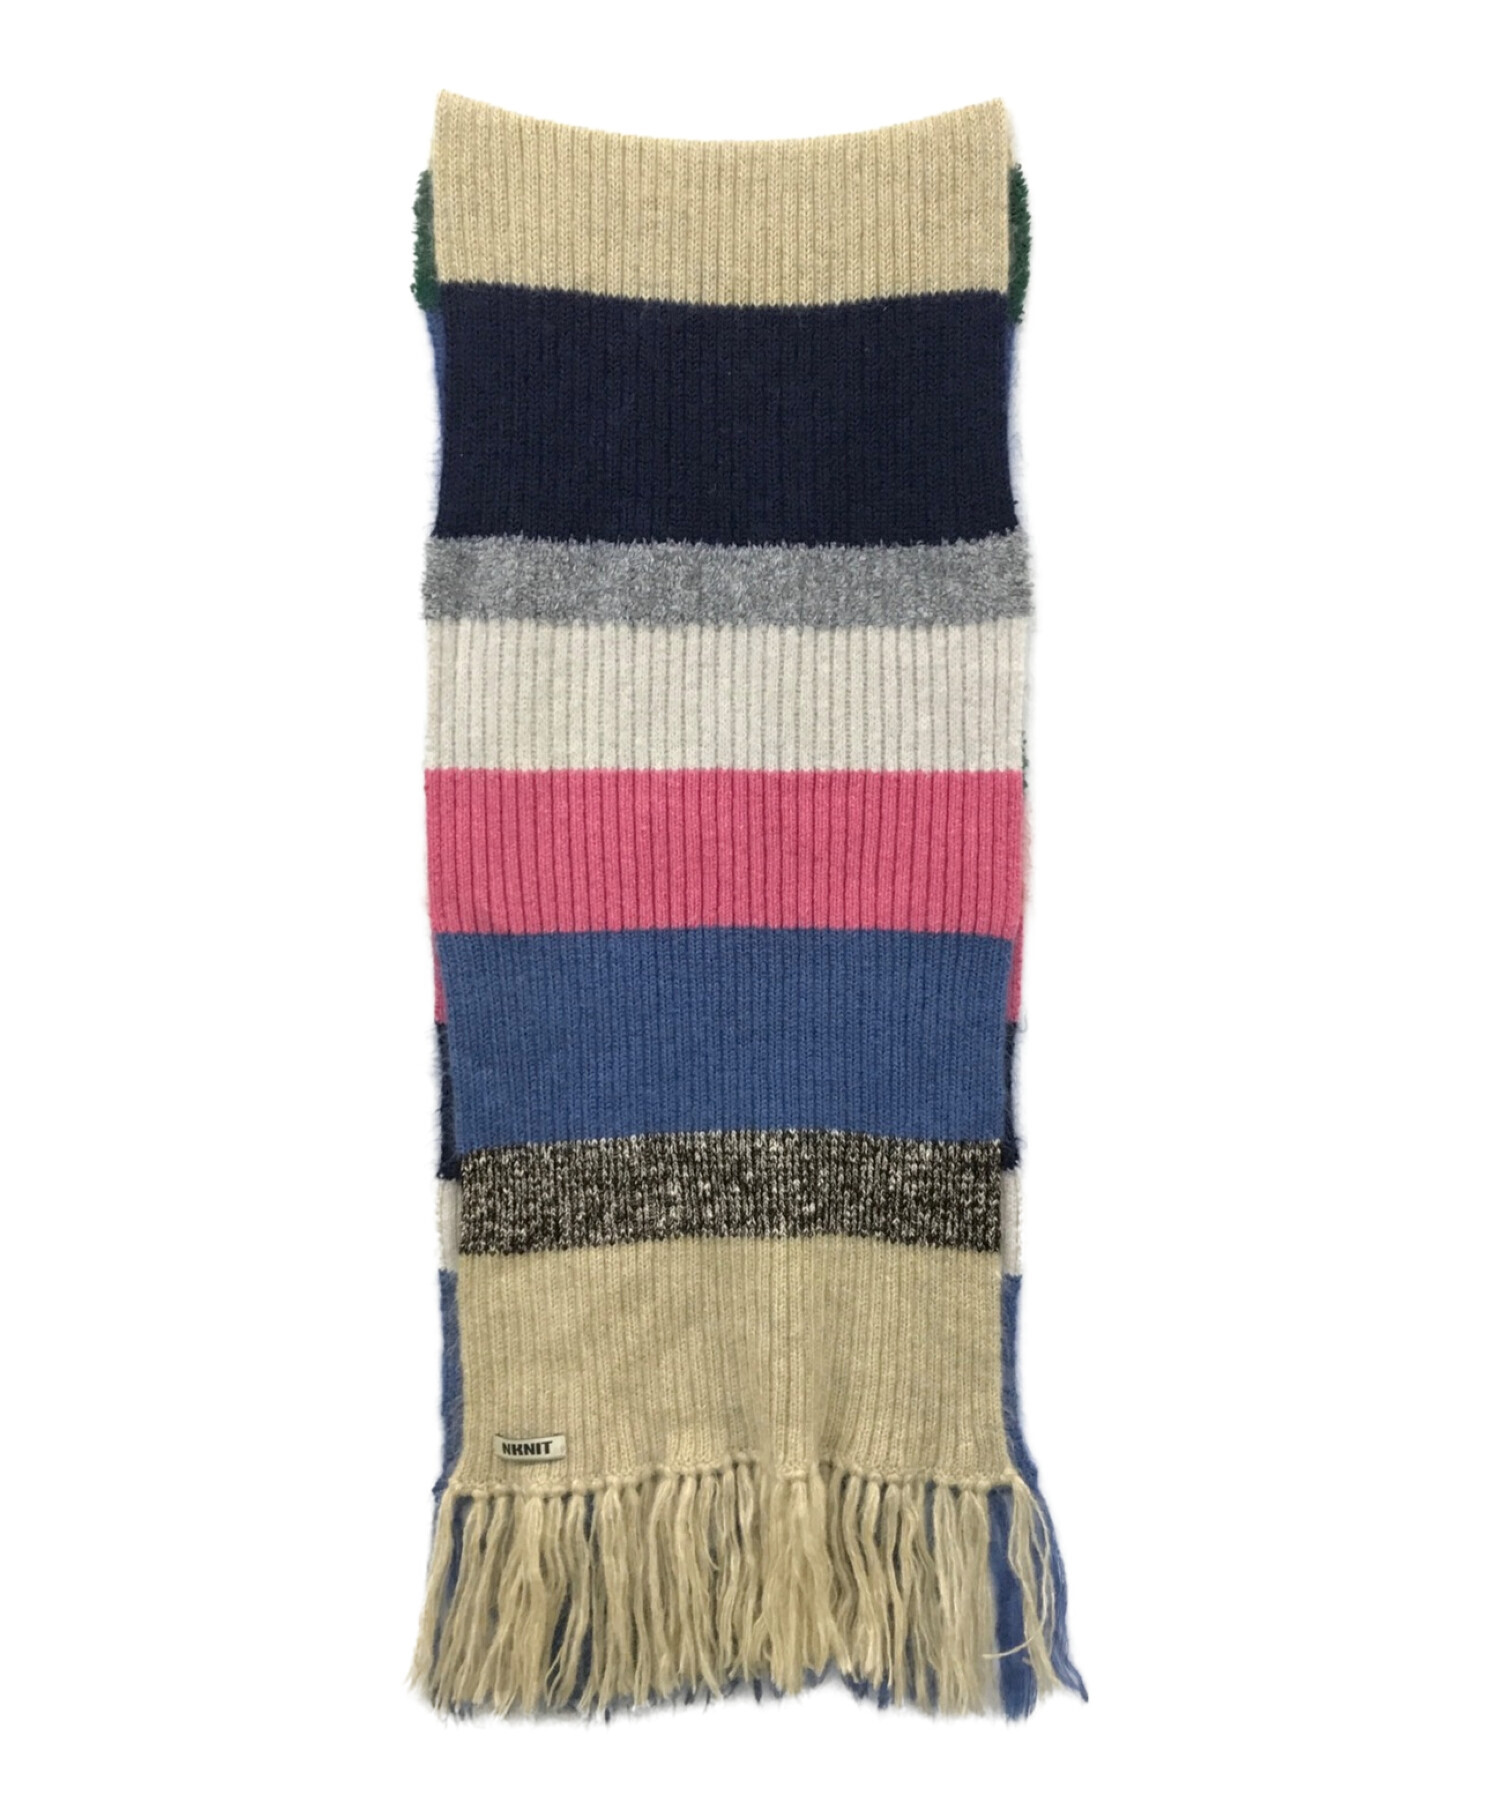 nknit マフラー mix stripe big KNIT scarf-